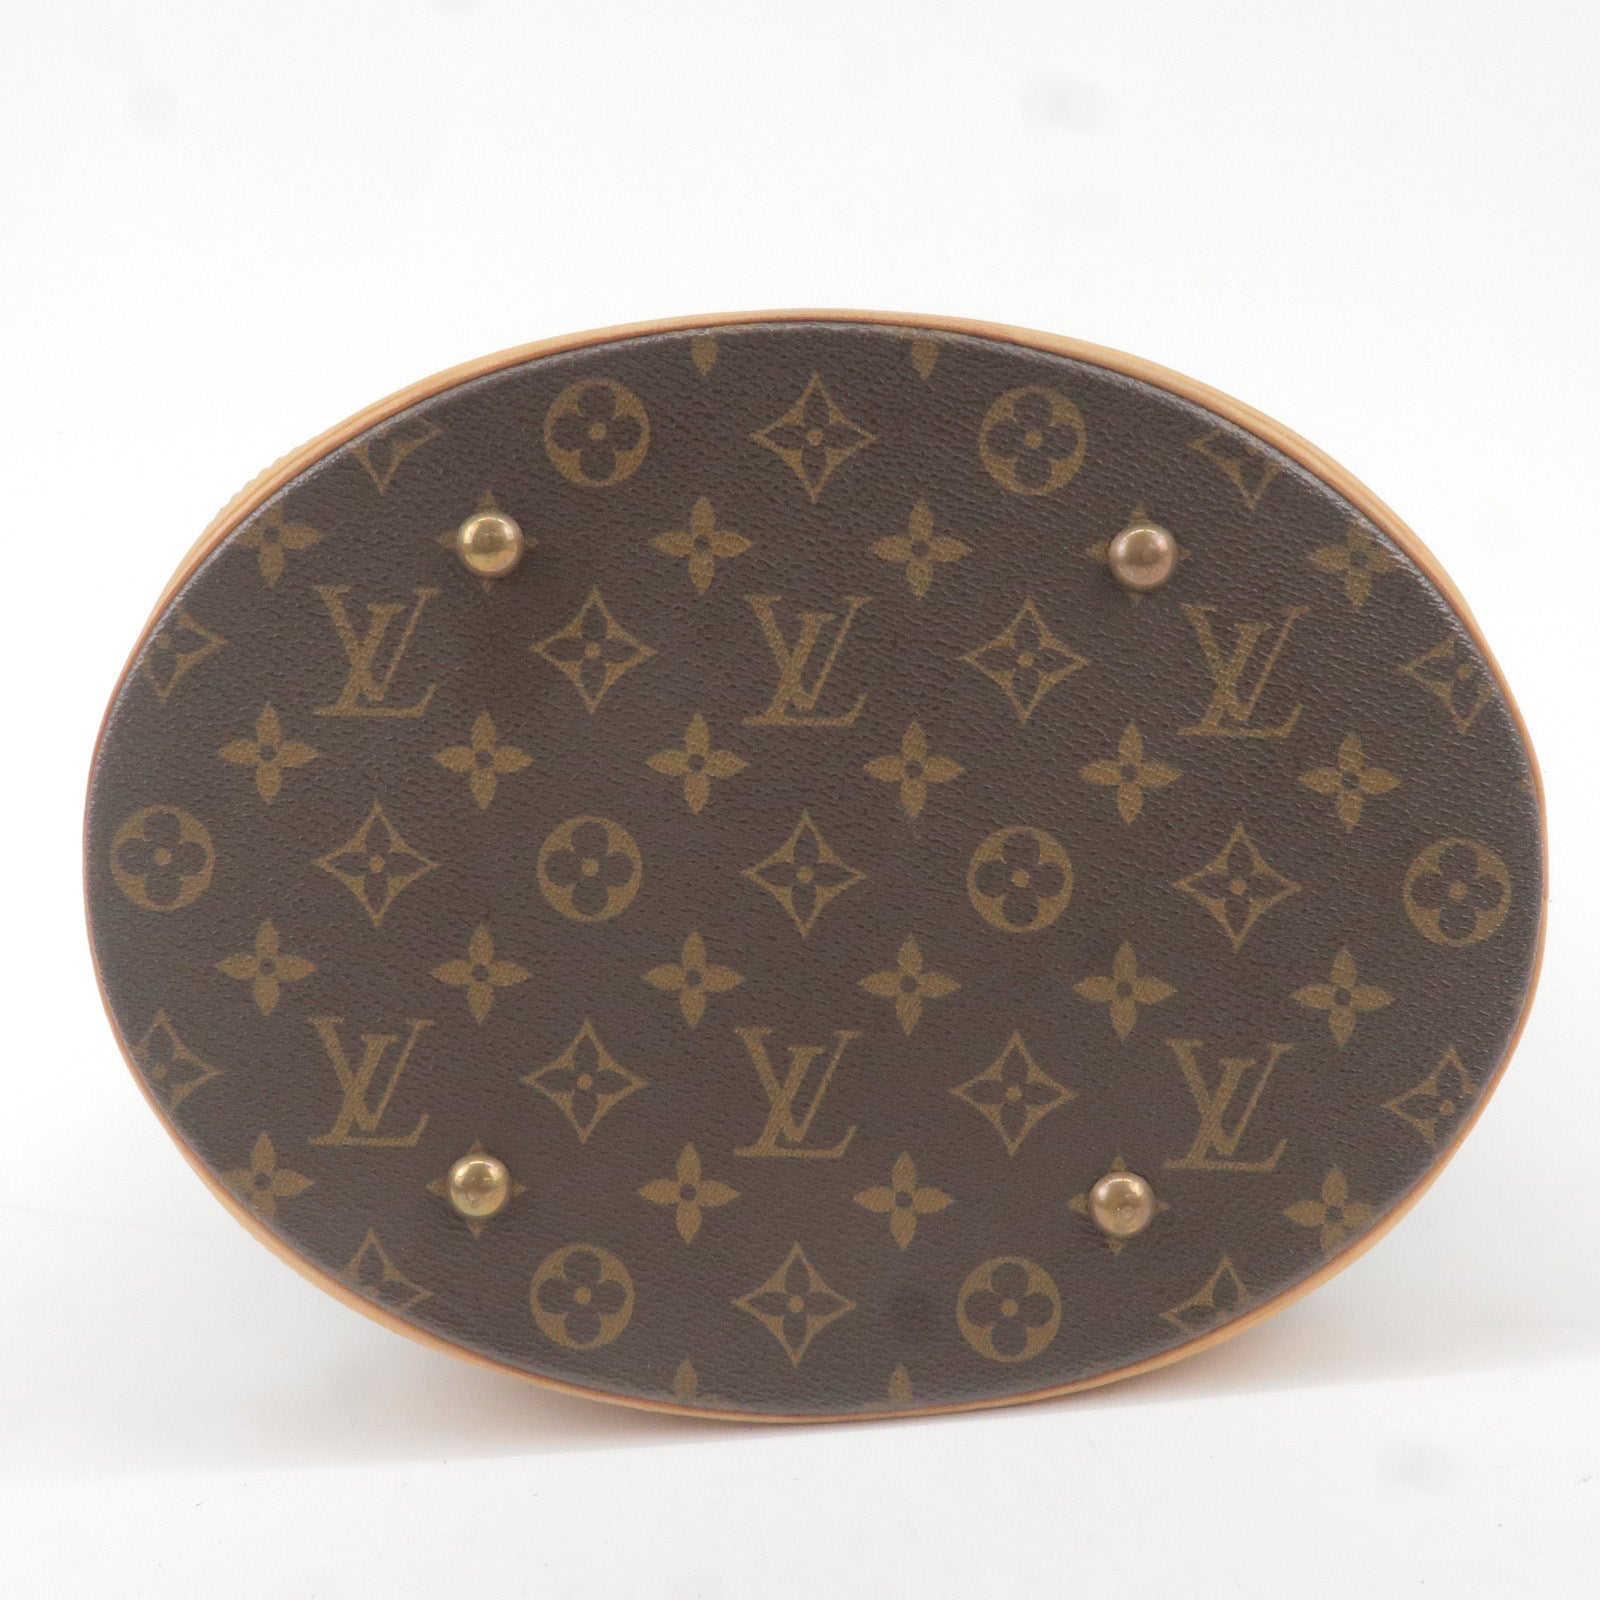 Louis Vuitton LV Gradient Monogram Sweat Shirt, Luxury, Apparel on